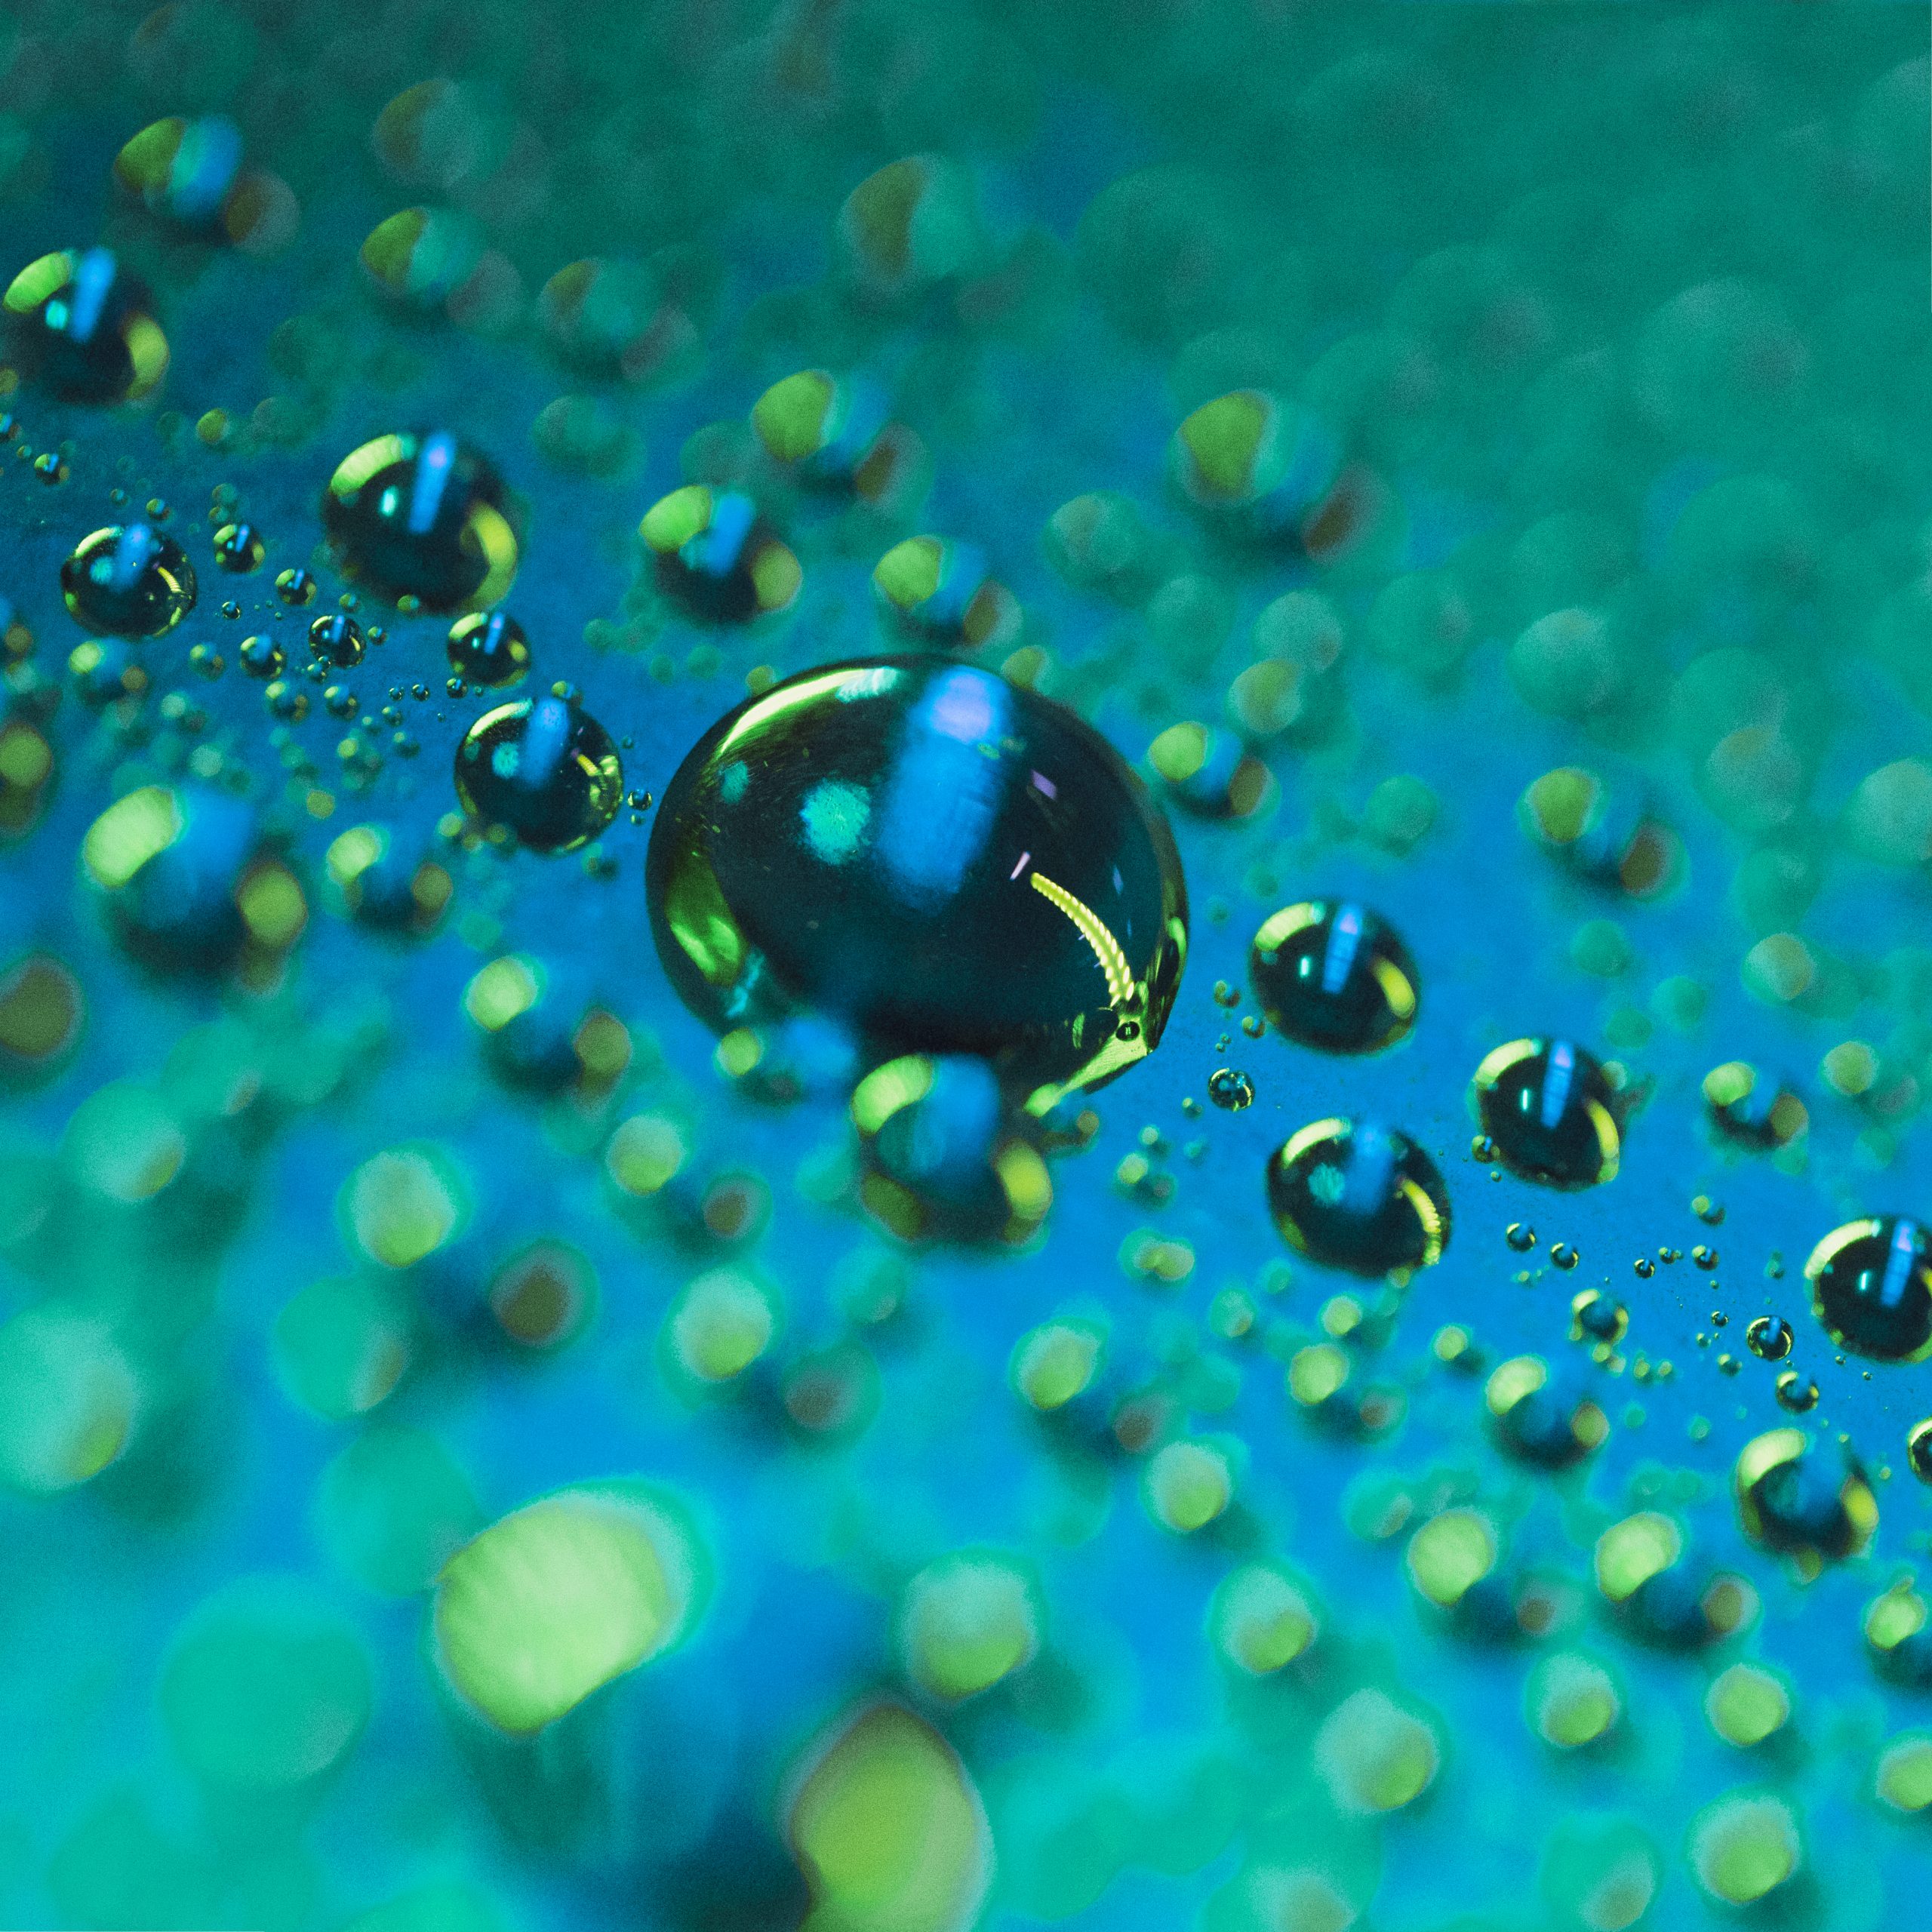 blur-green-bokeh-with-water-drop-surface